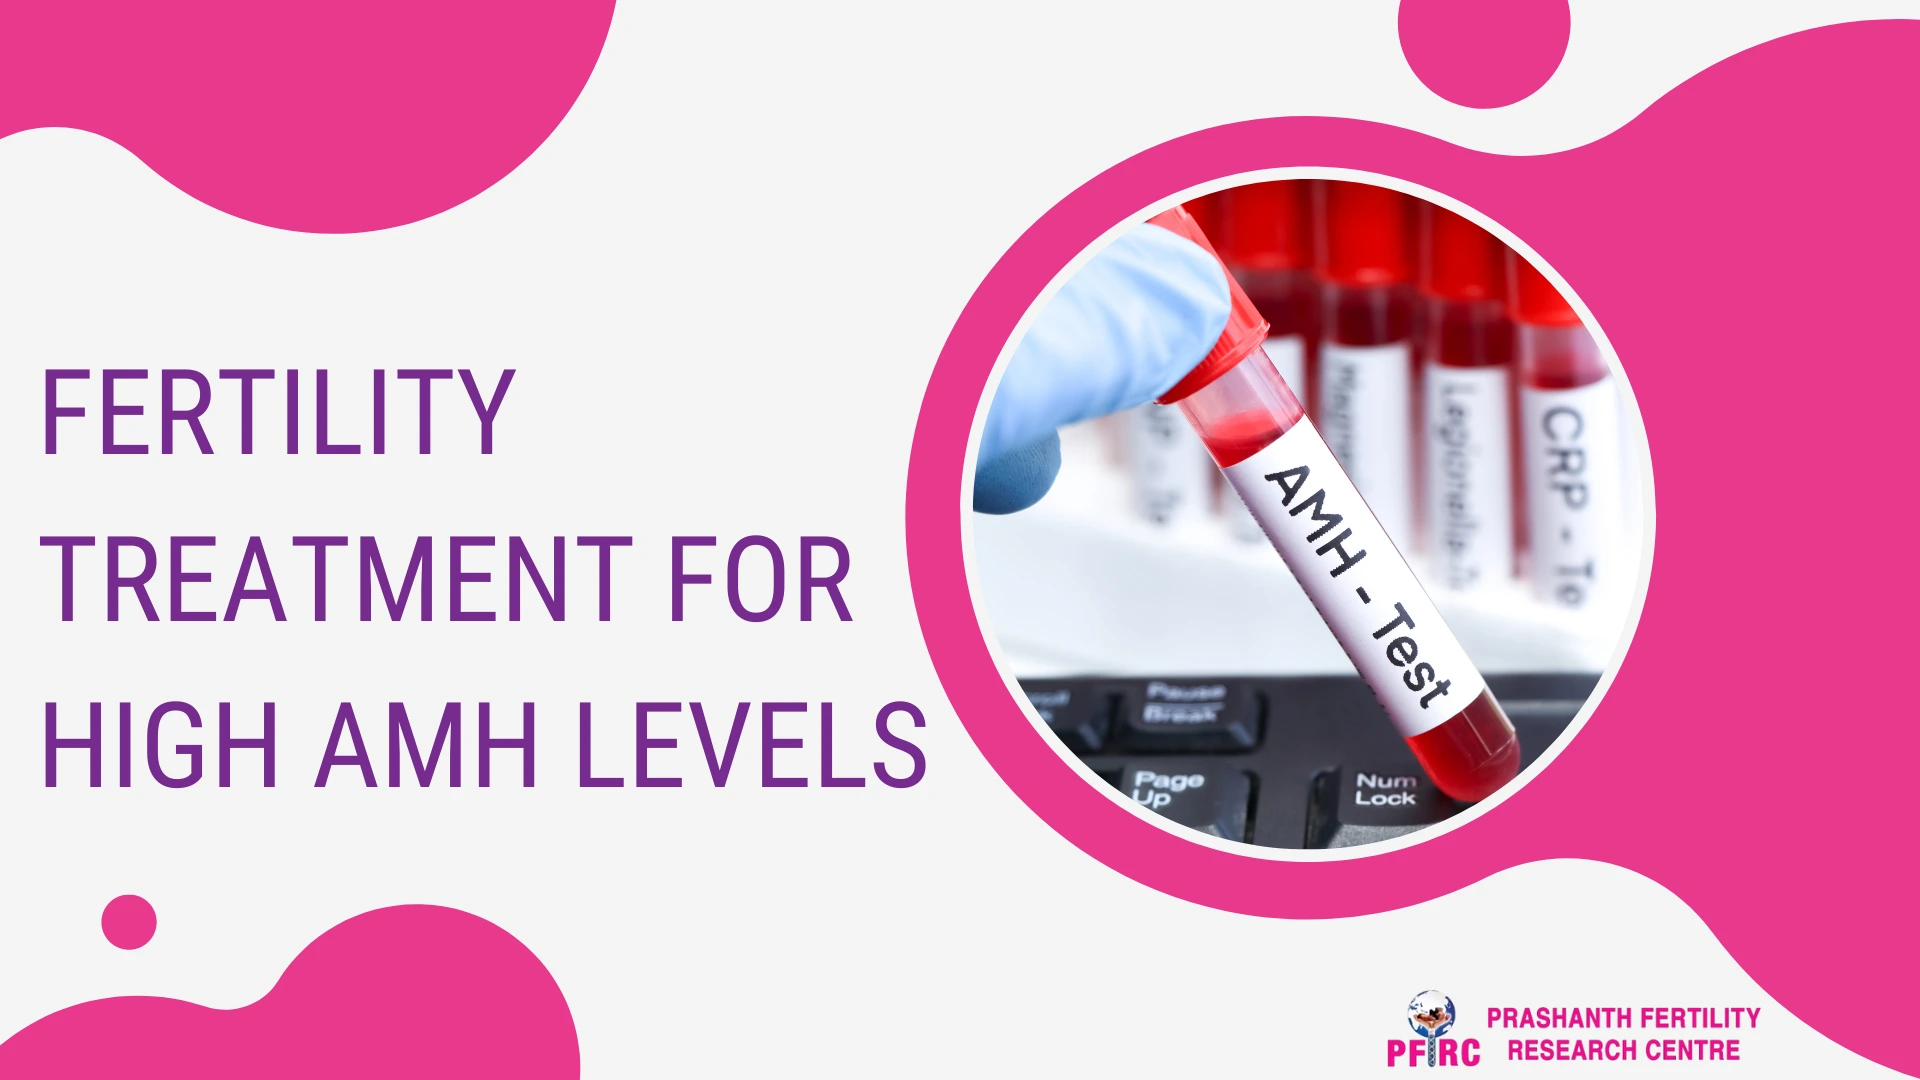 Fertility Treatment For High AMH Levels